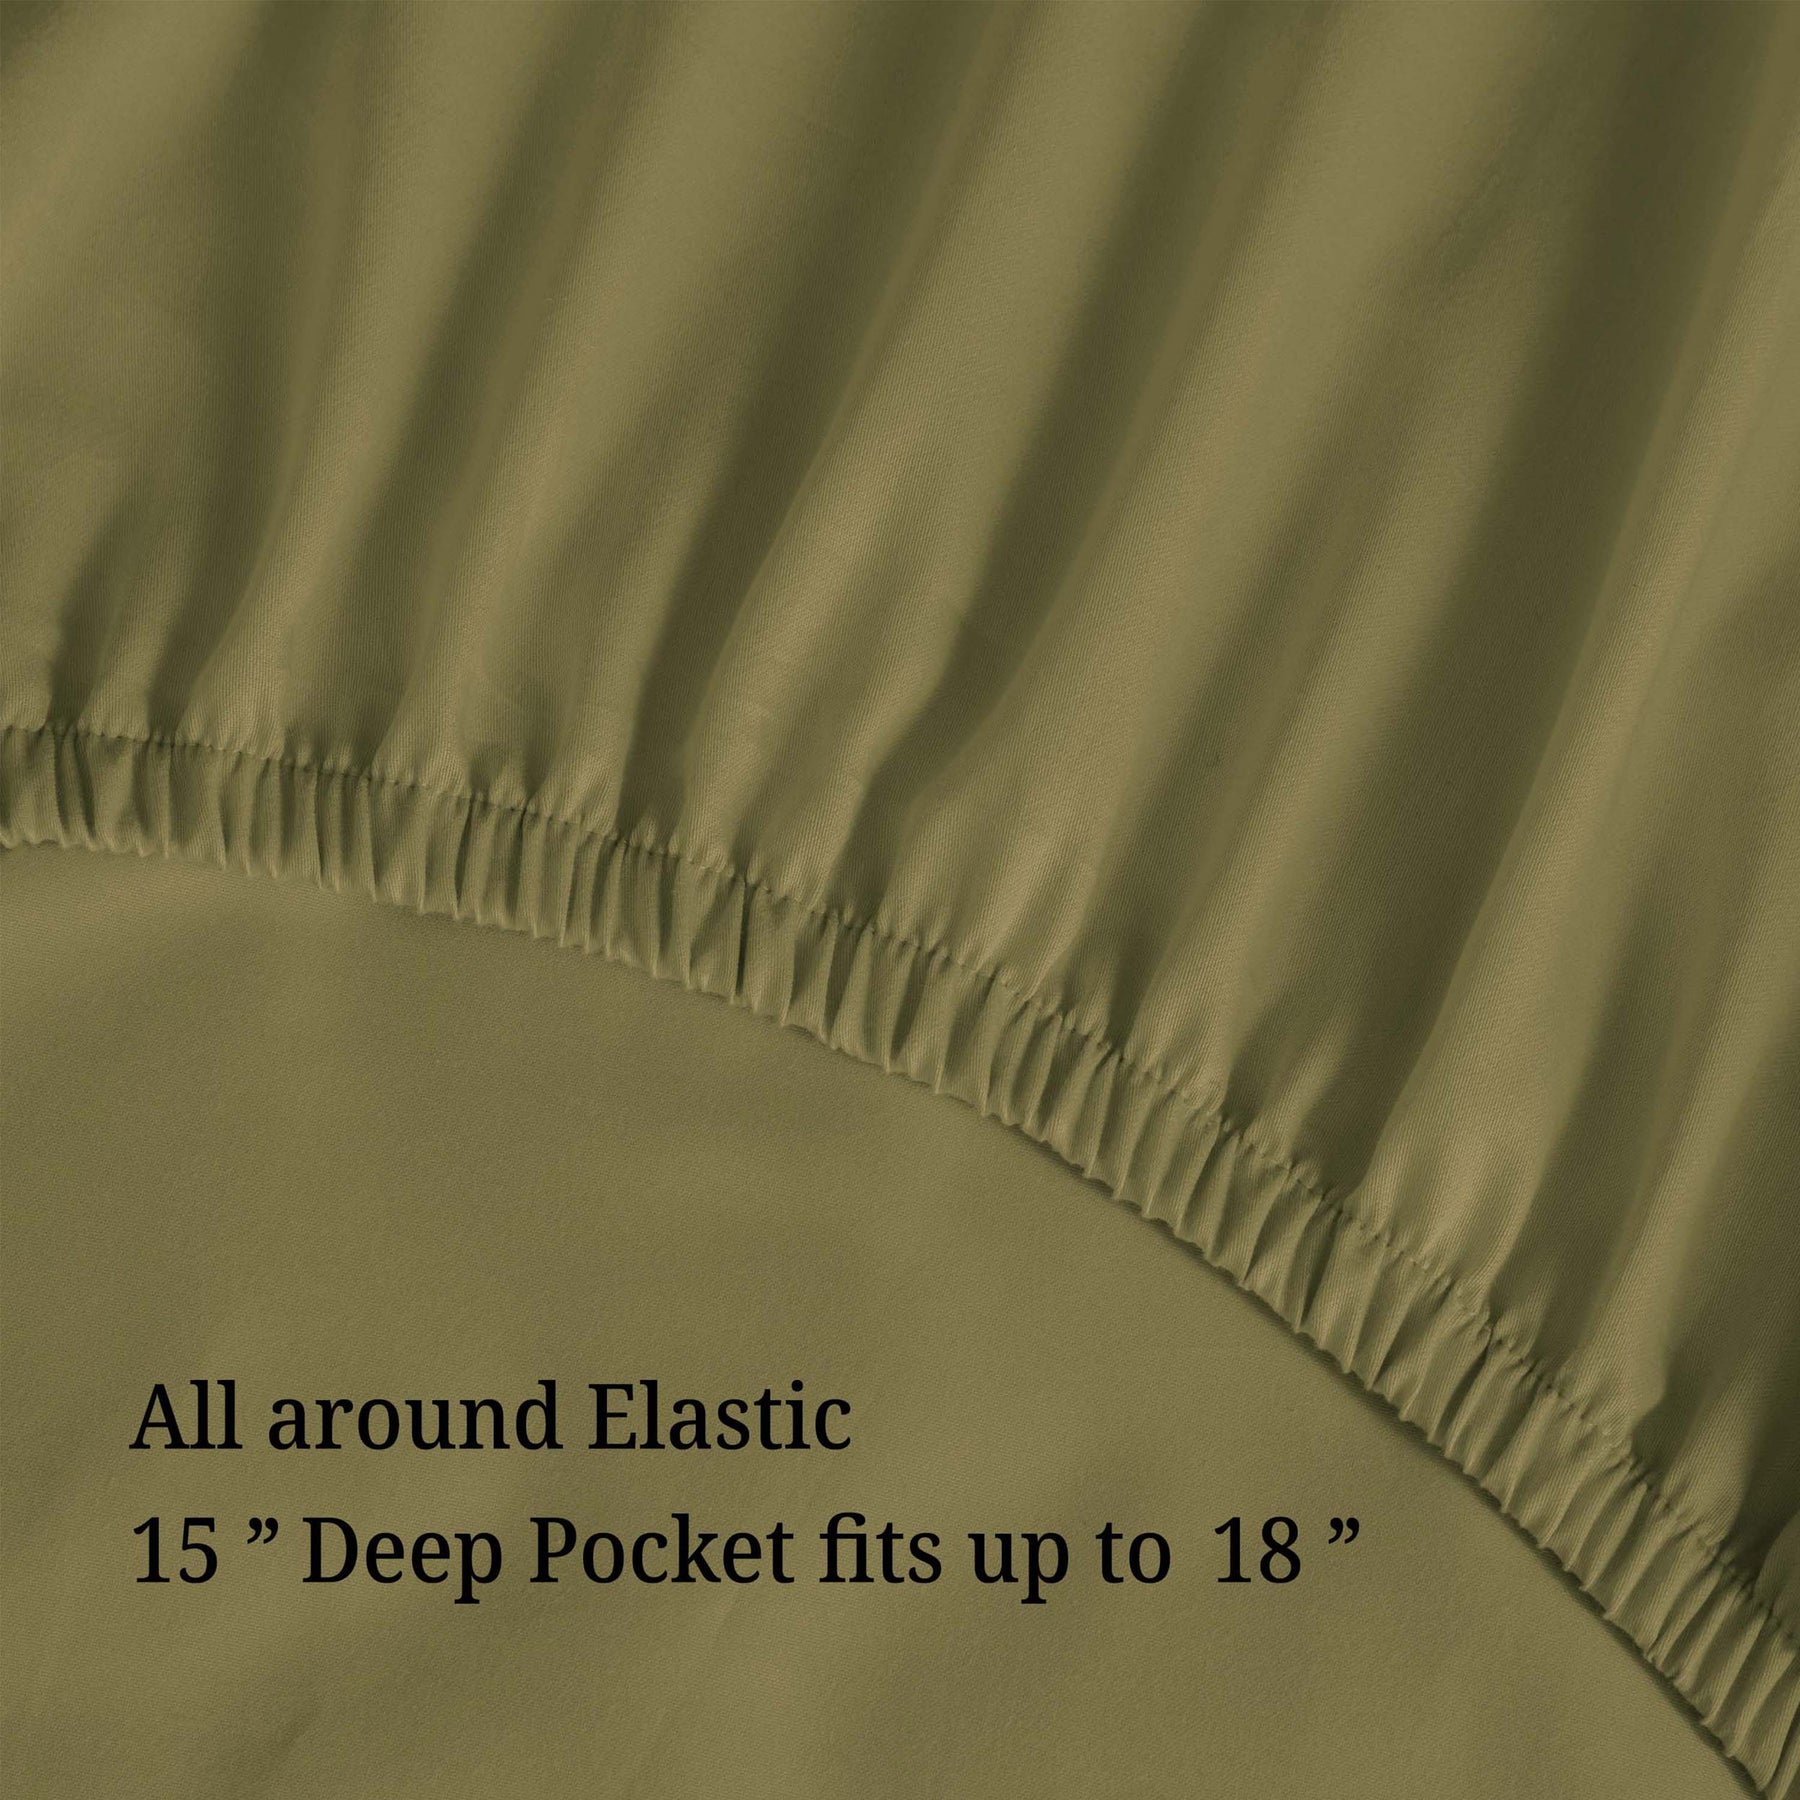 Egyptian Cotton 300 Thread Count Solid Deep Pocket Sheet Set - Sage